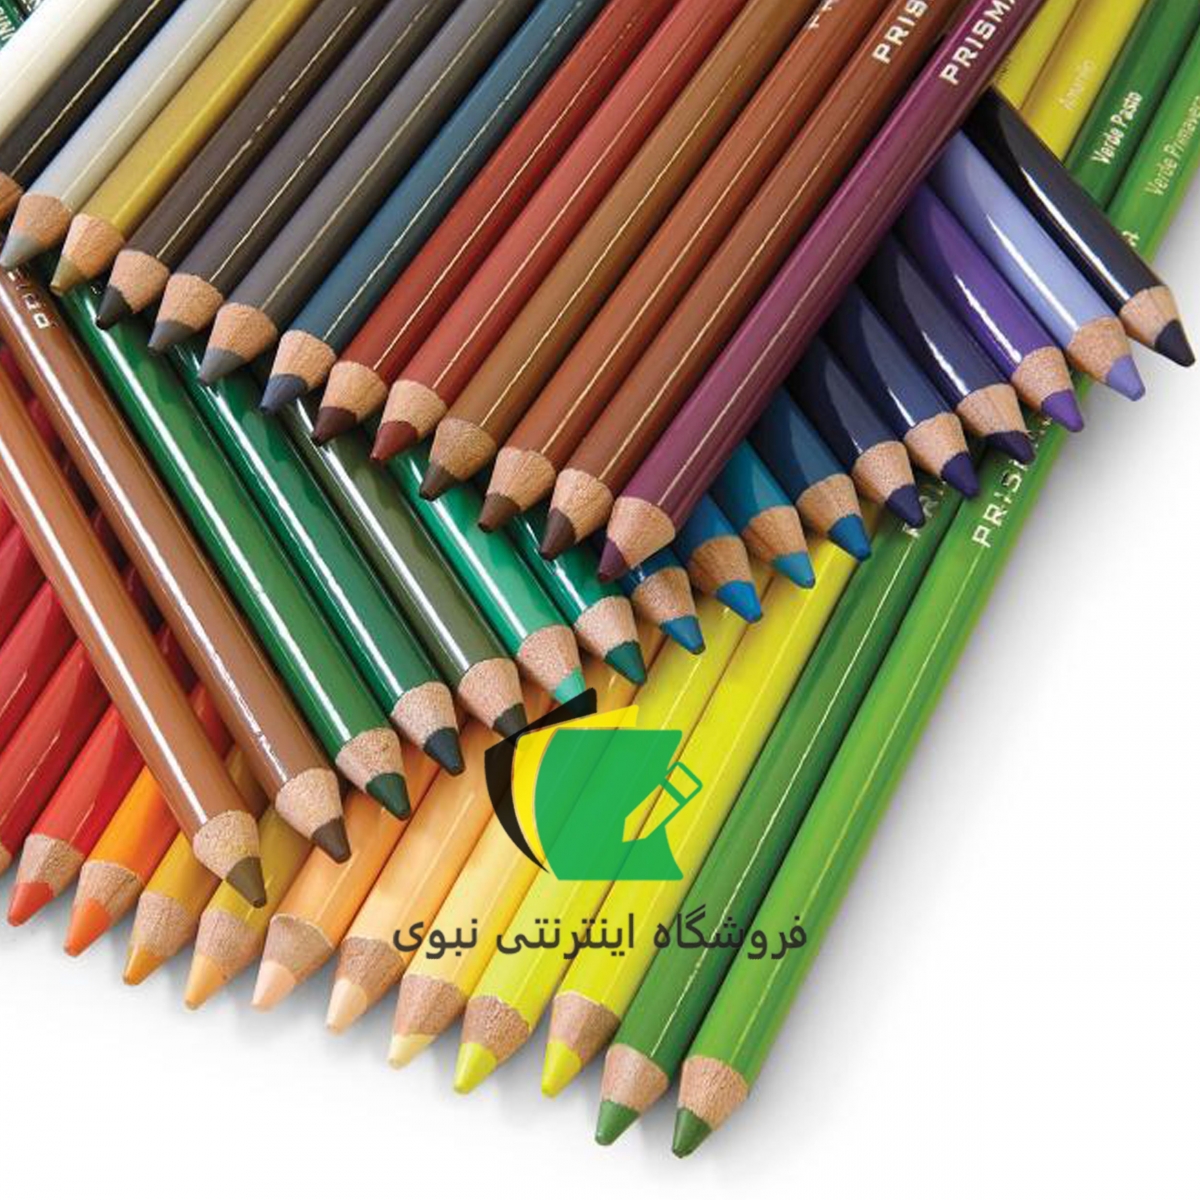 مداد رنگی 48 رنگ پریسماکالر مدل premier کد 3452 